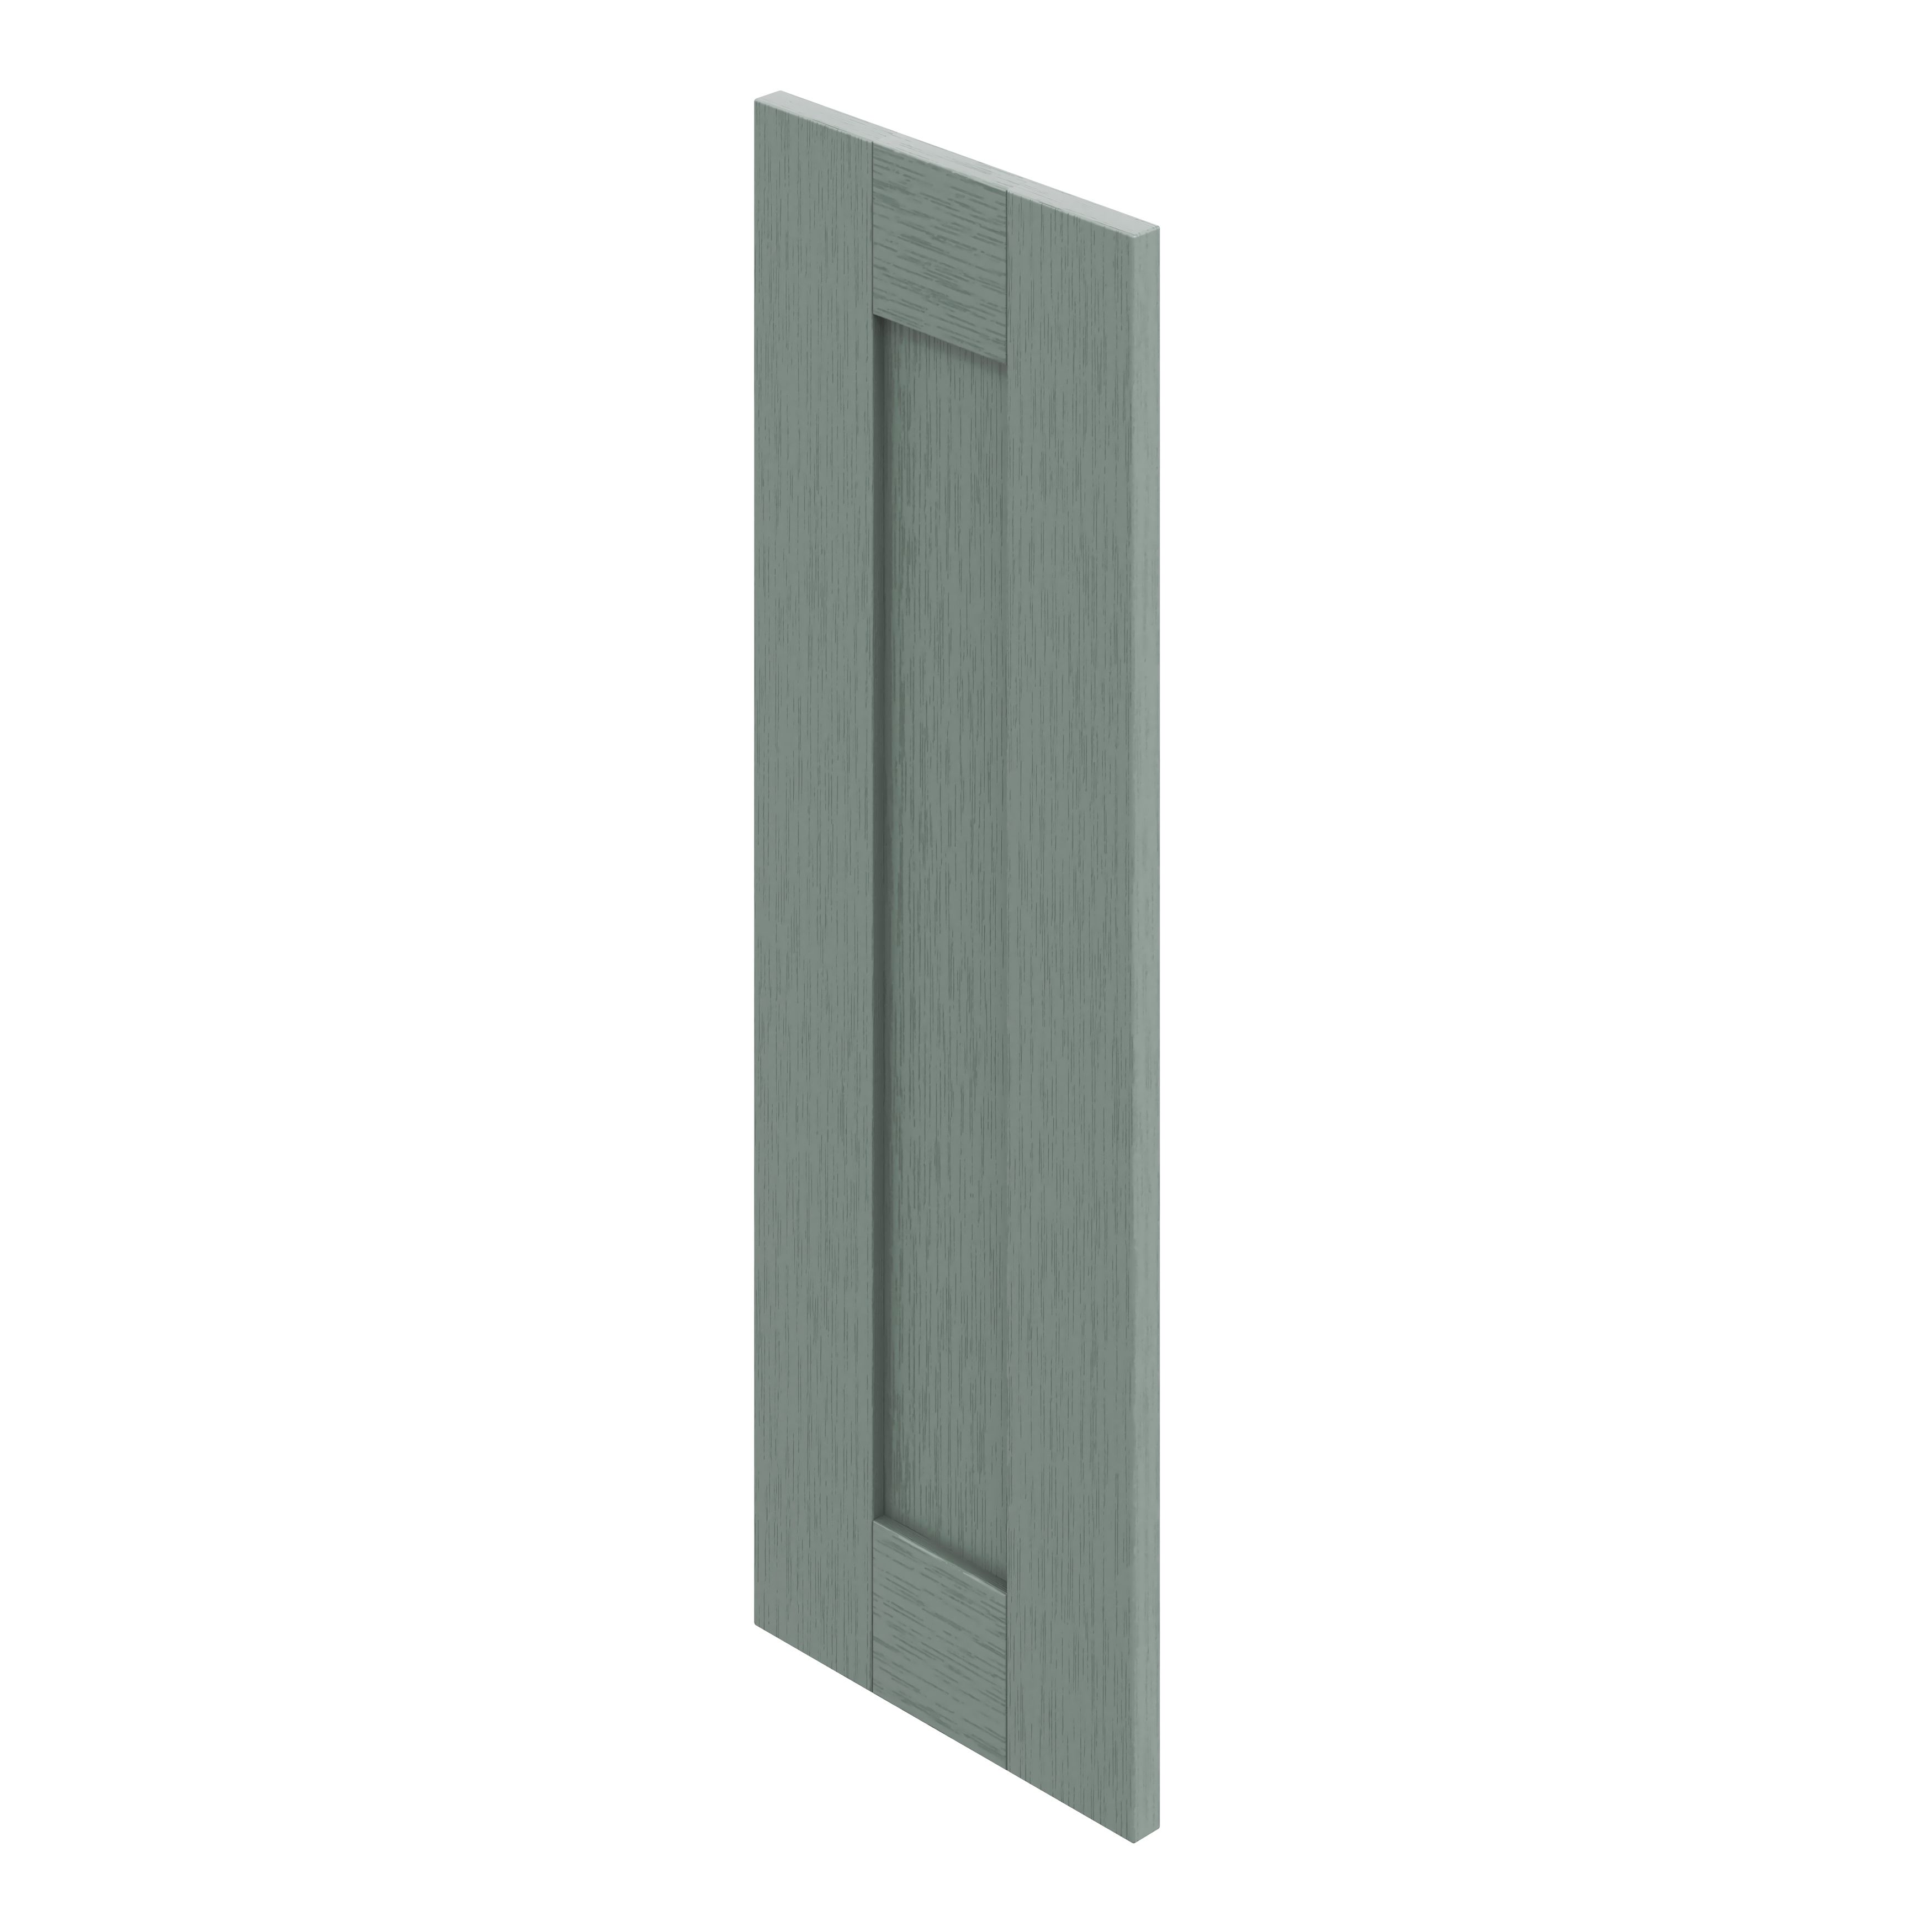 GoodHome Alpinia Matt Green Painted Wood Effect Shaker Highline Cabinet door (W)250mm (H)715mm (T)18mm